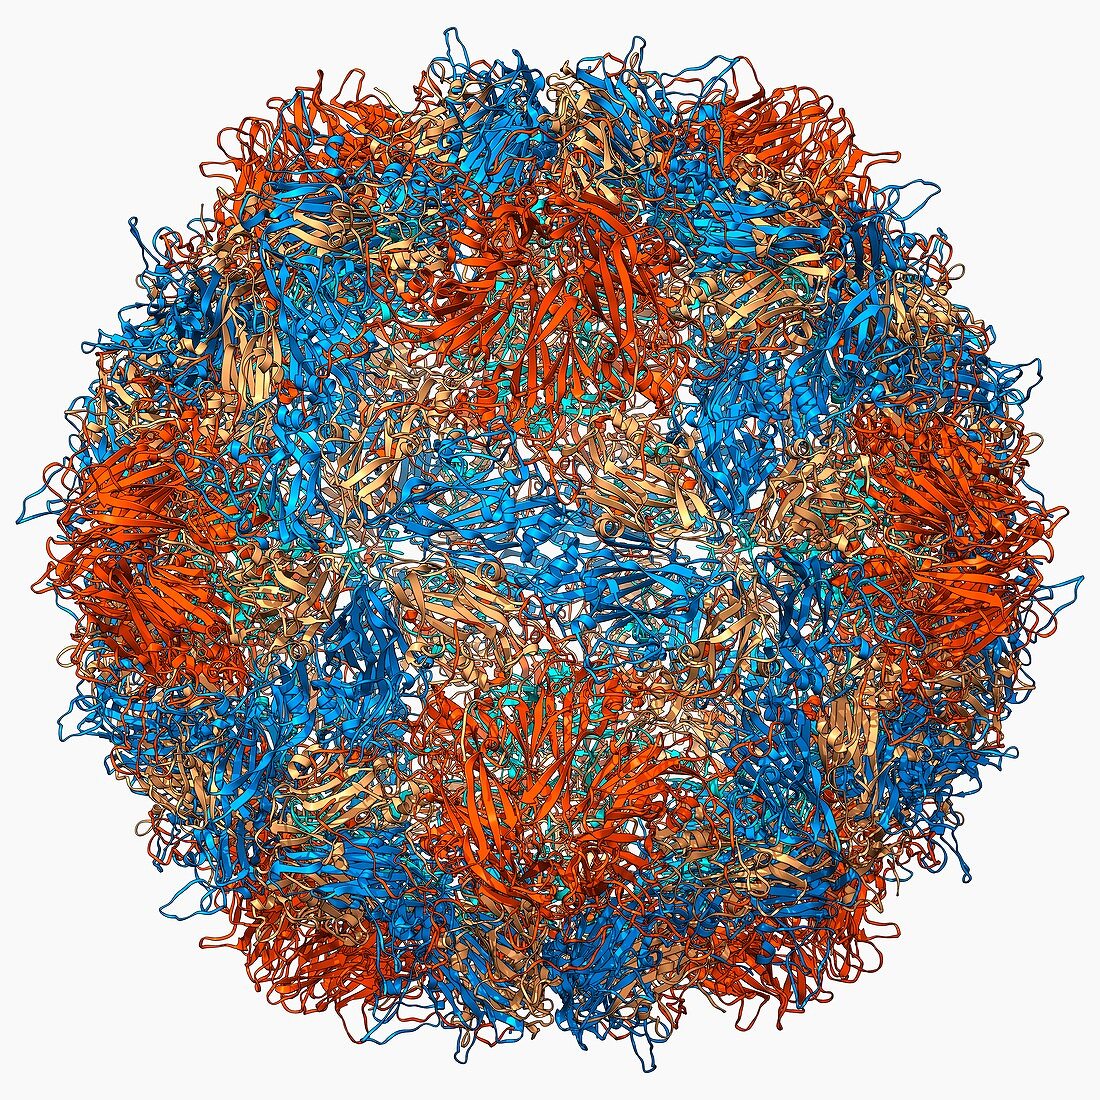 Poliovirus type 3 capsid,molecular model